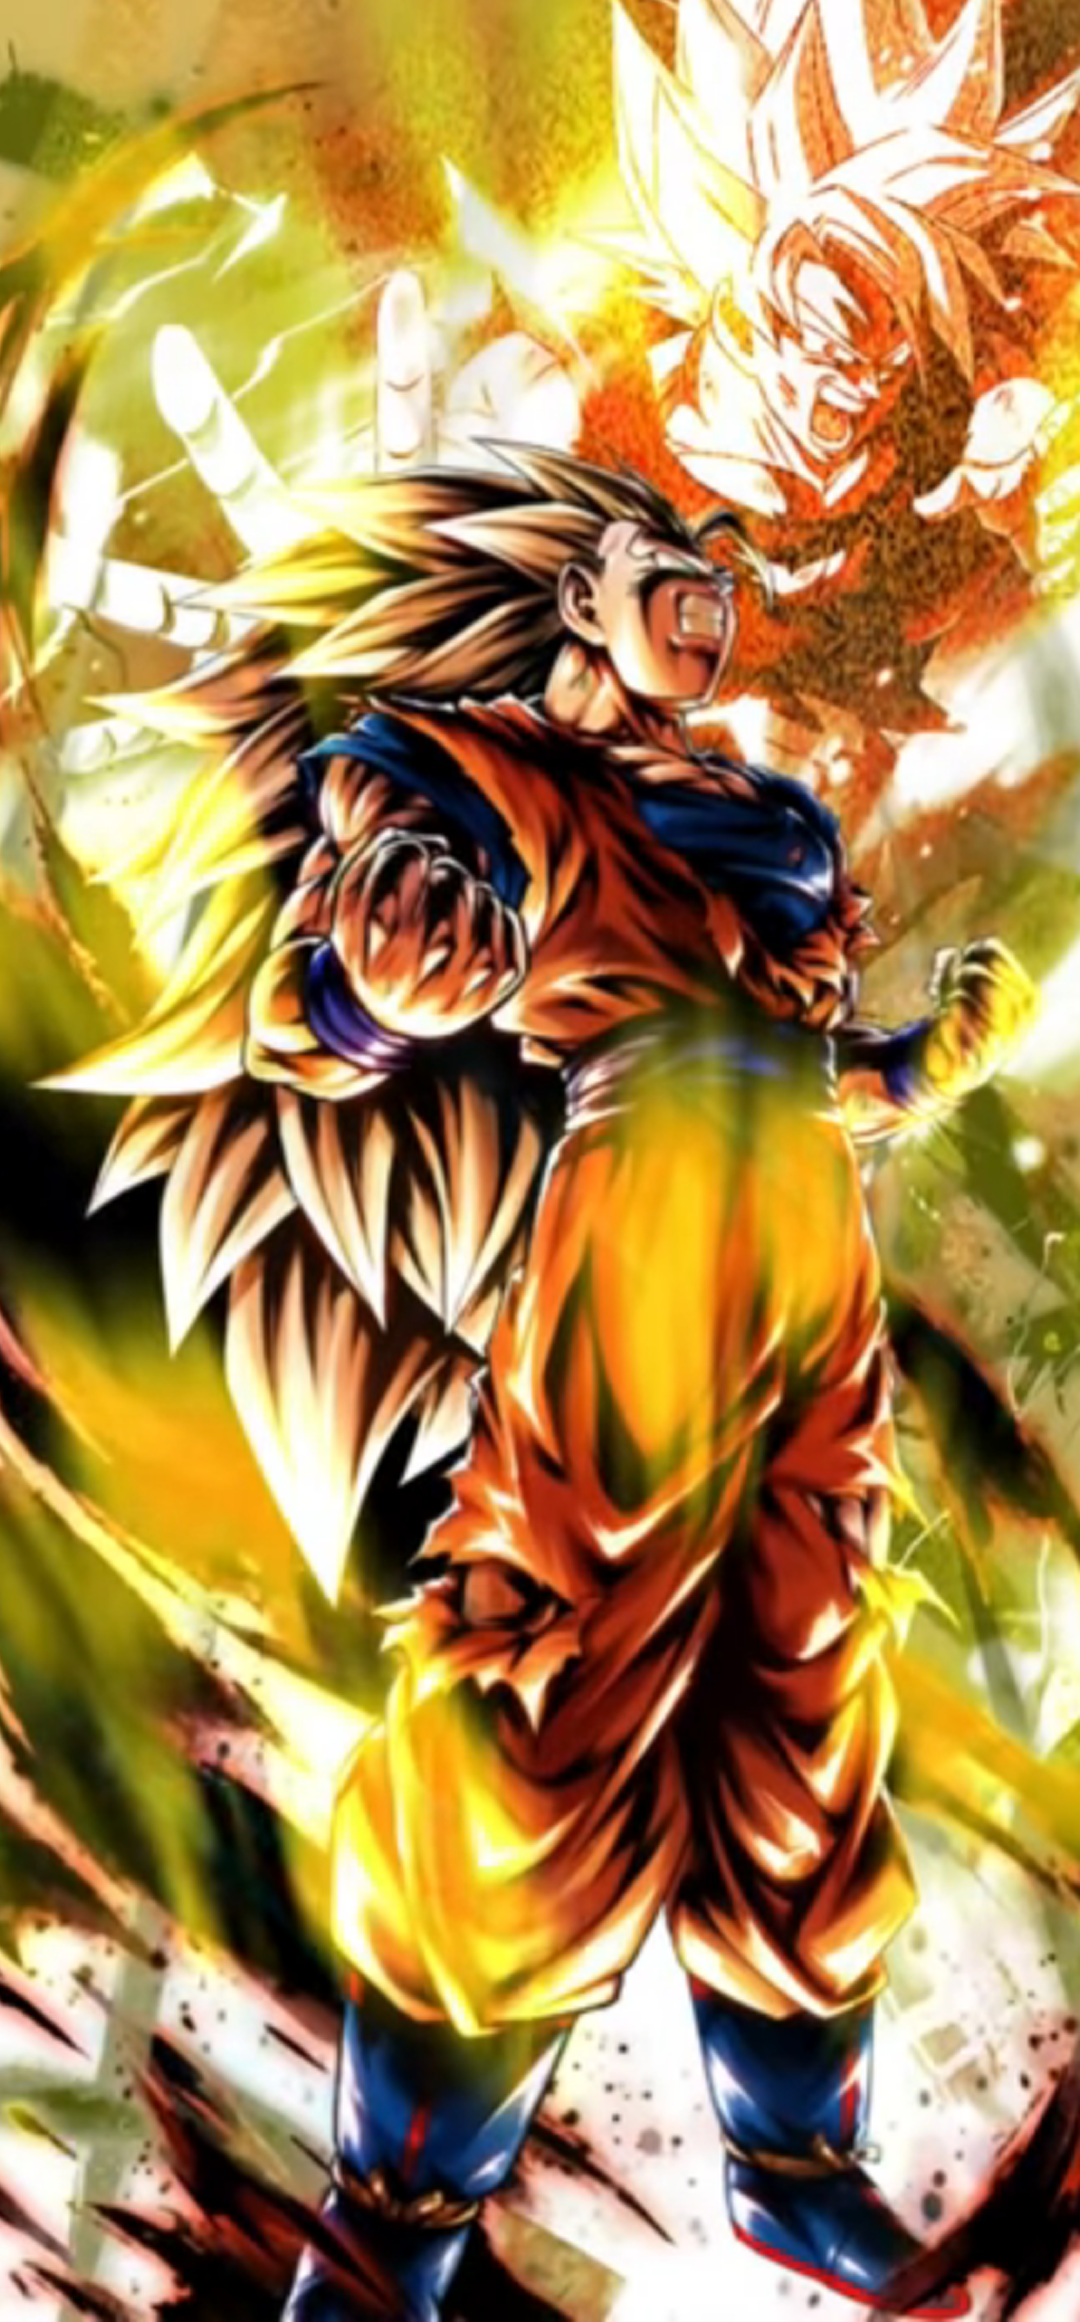 Super Saiyan 5 Goku in Dragon Ball Legends #dblmods #dblegends